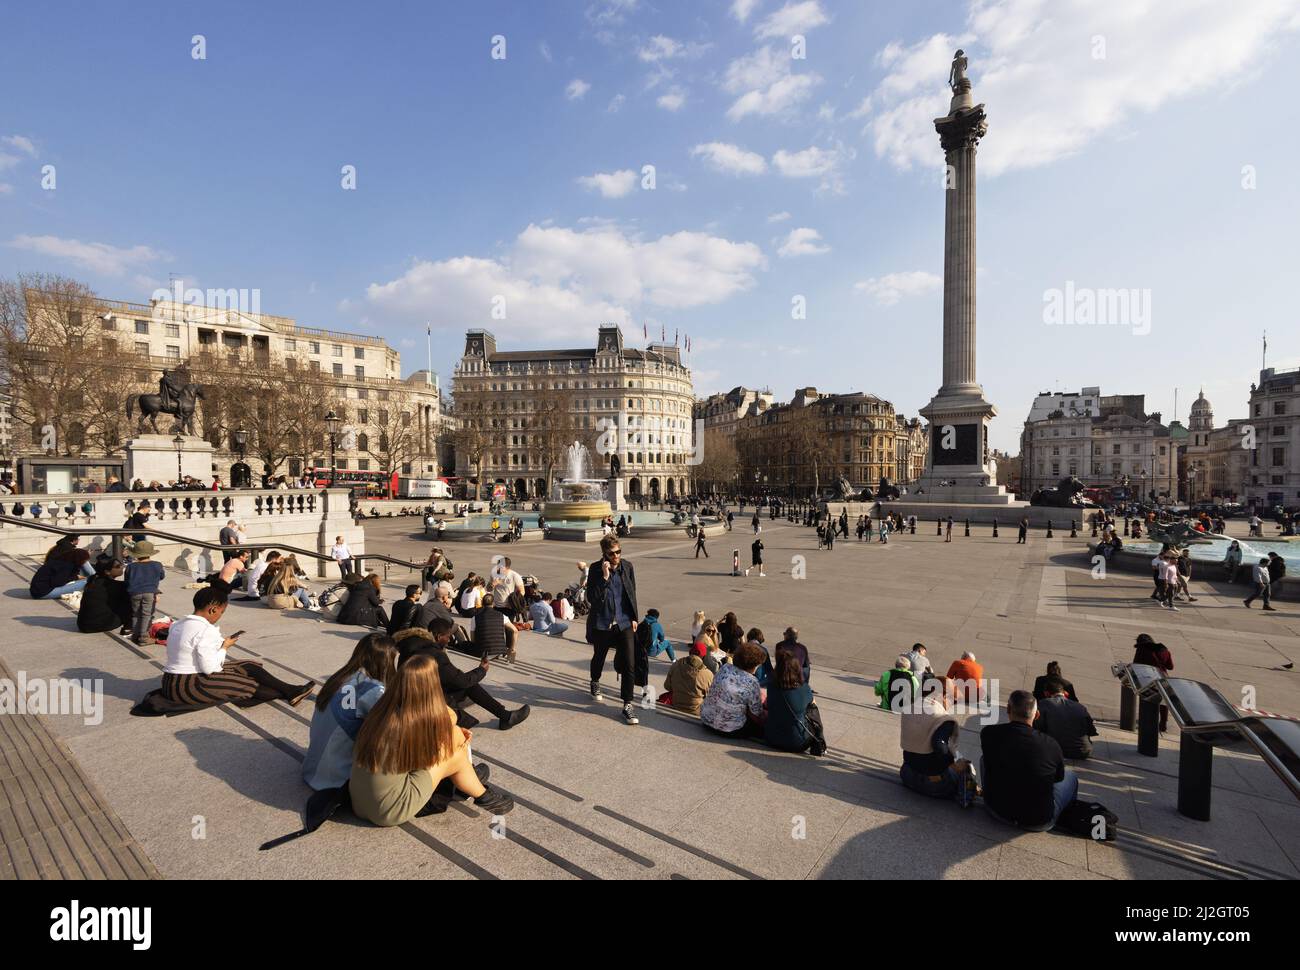 Nelsons Column Trafalgar Square London scene - people enjoying the spring sunshine sitting outside in central London WC2, London UK Stock Photo